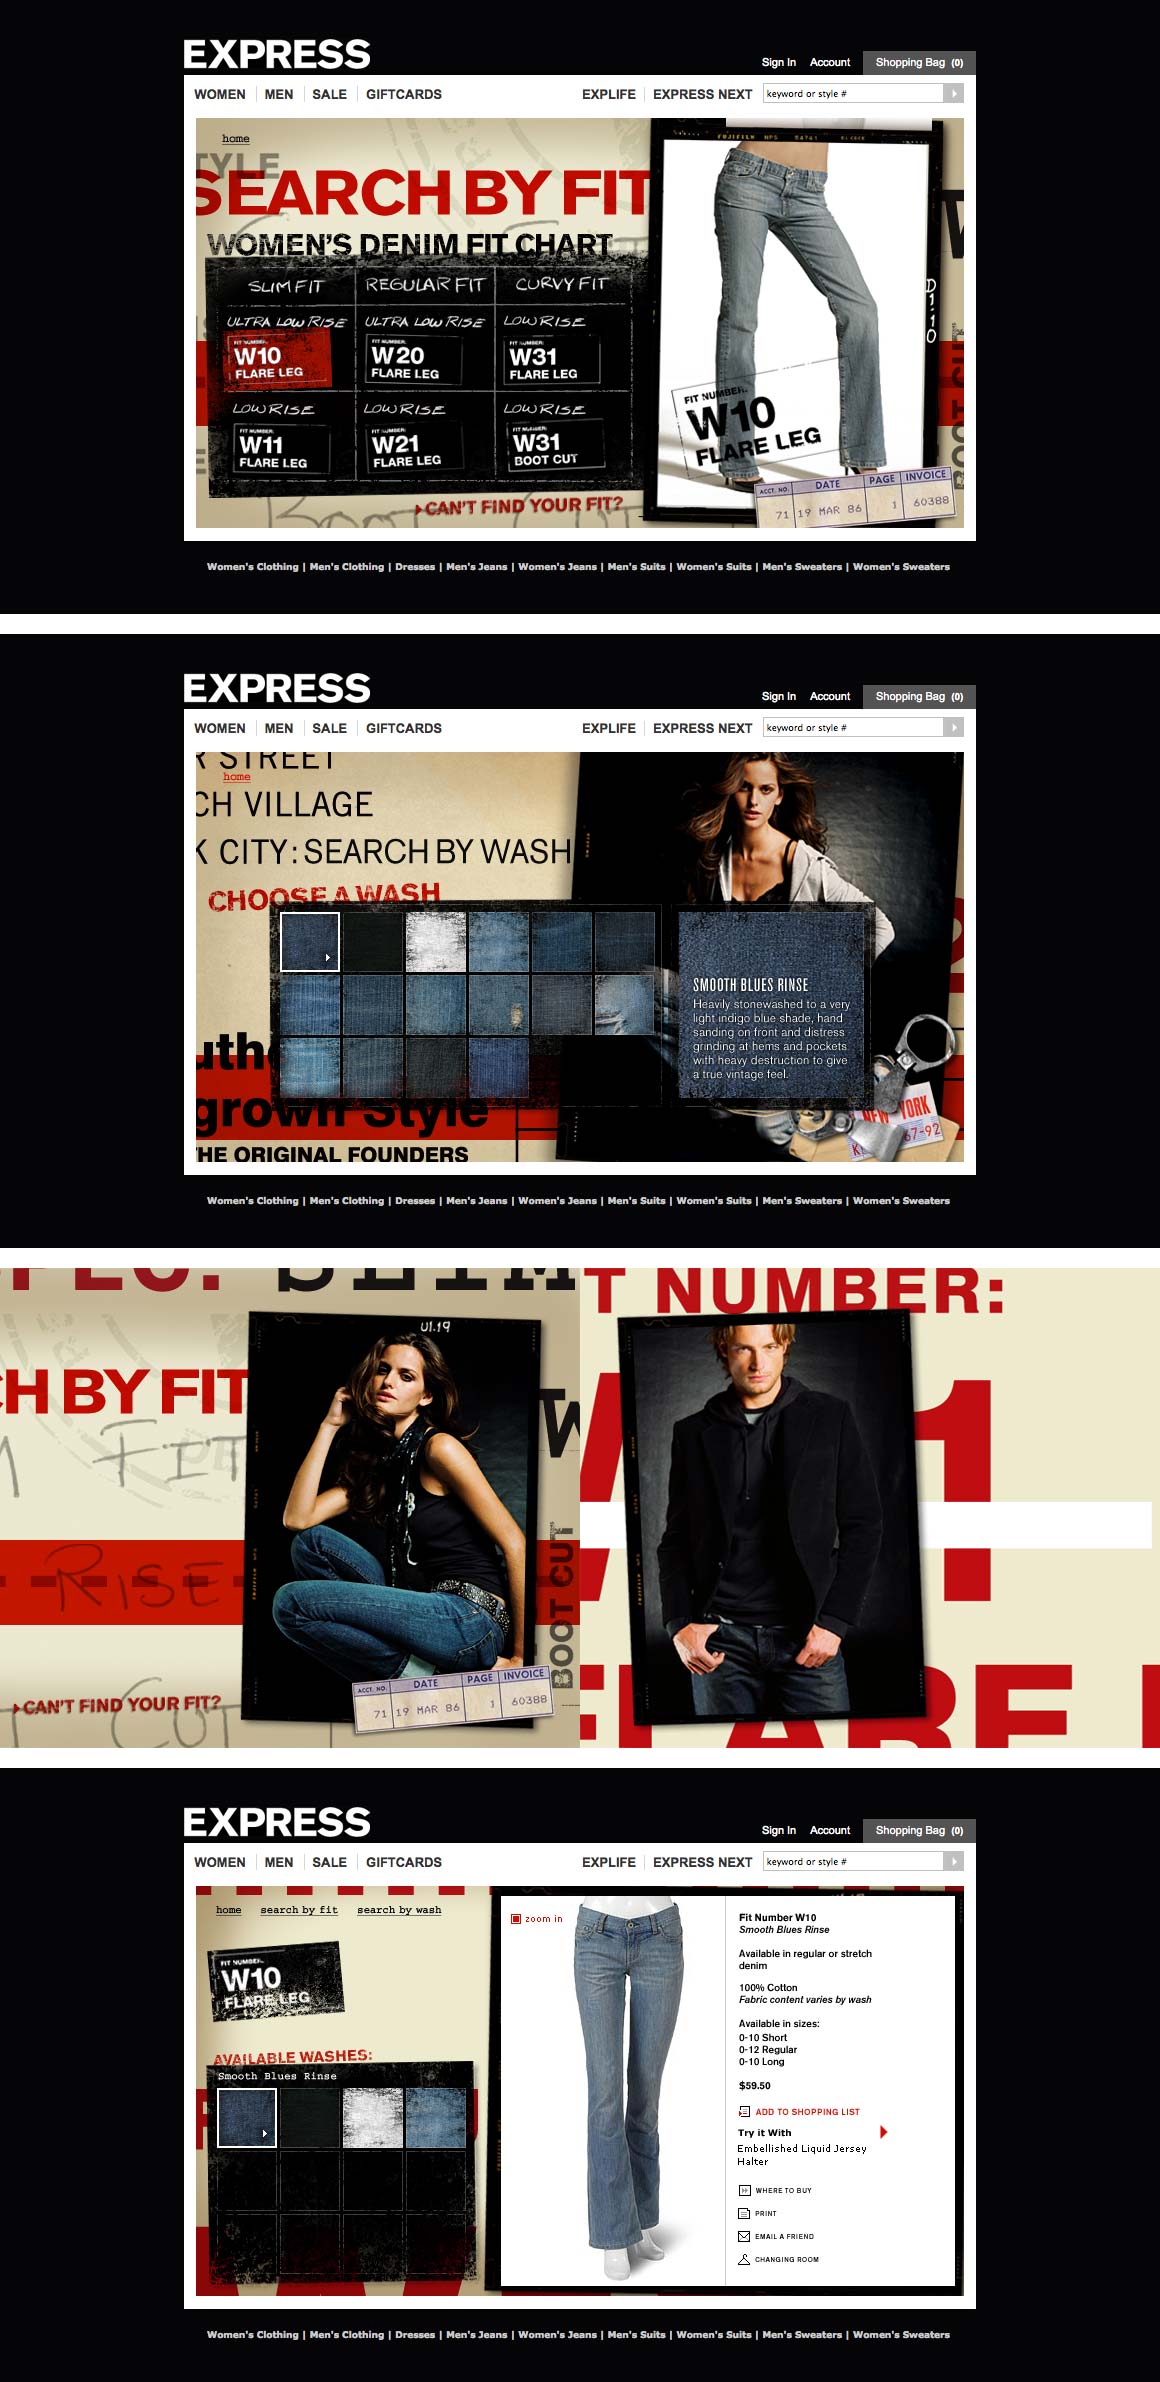 EXPRESS Fashion Promotional Website Design